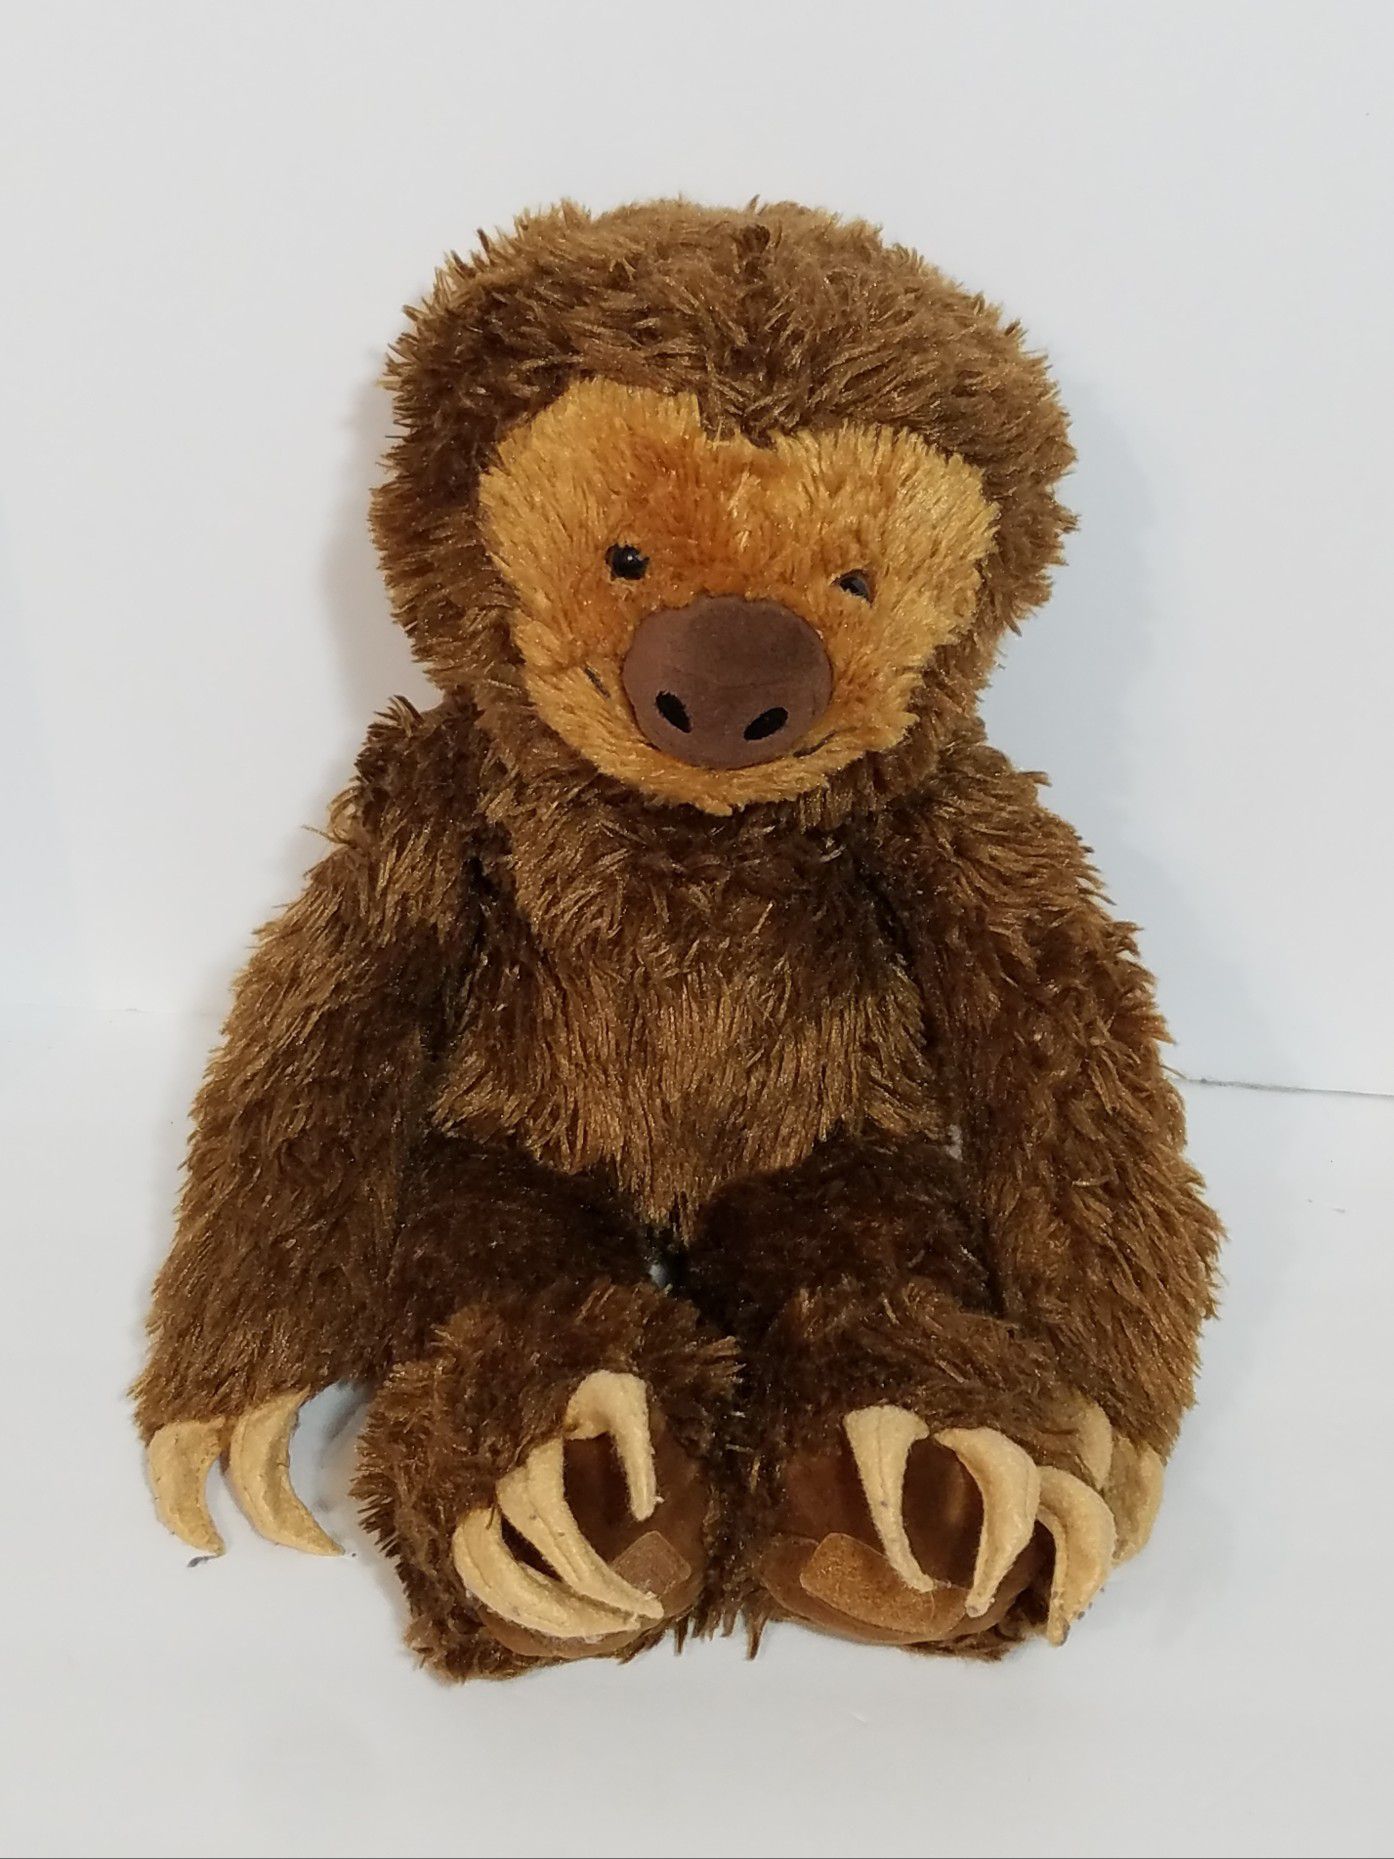 18” Build-a-Bear Three Toed Sloth Stuffed Animal Plush BAB Hugging Arms Legs